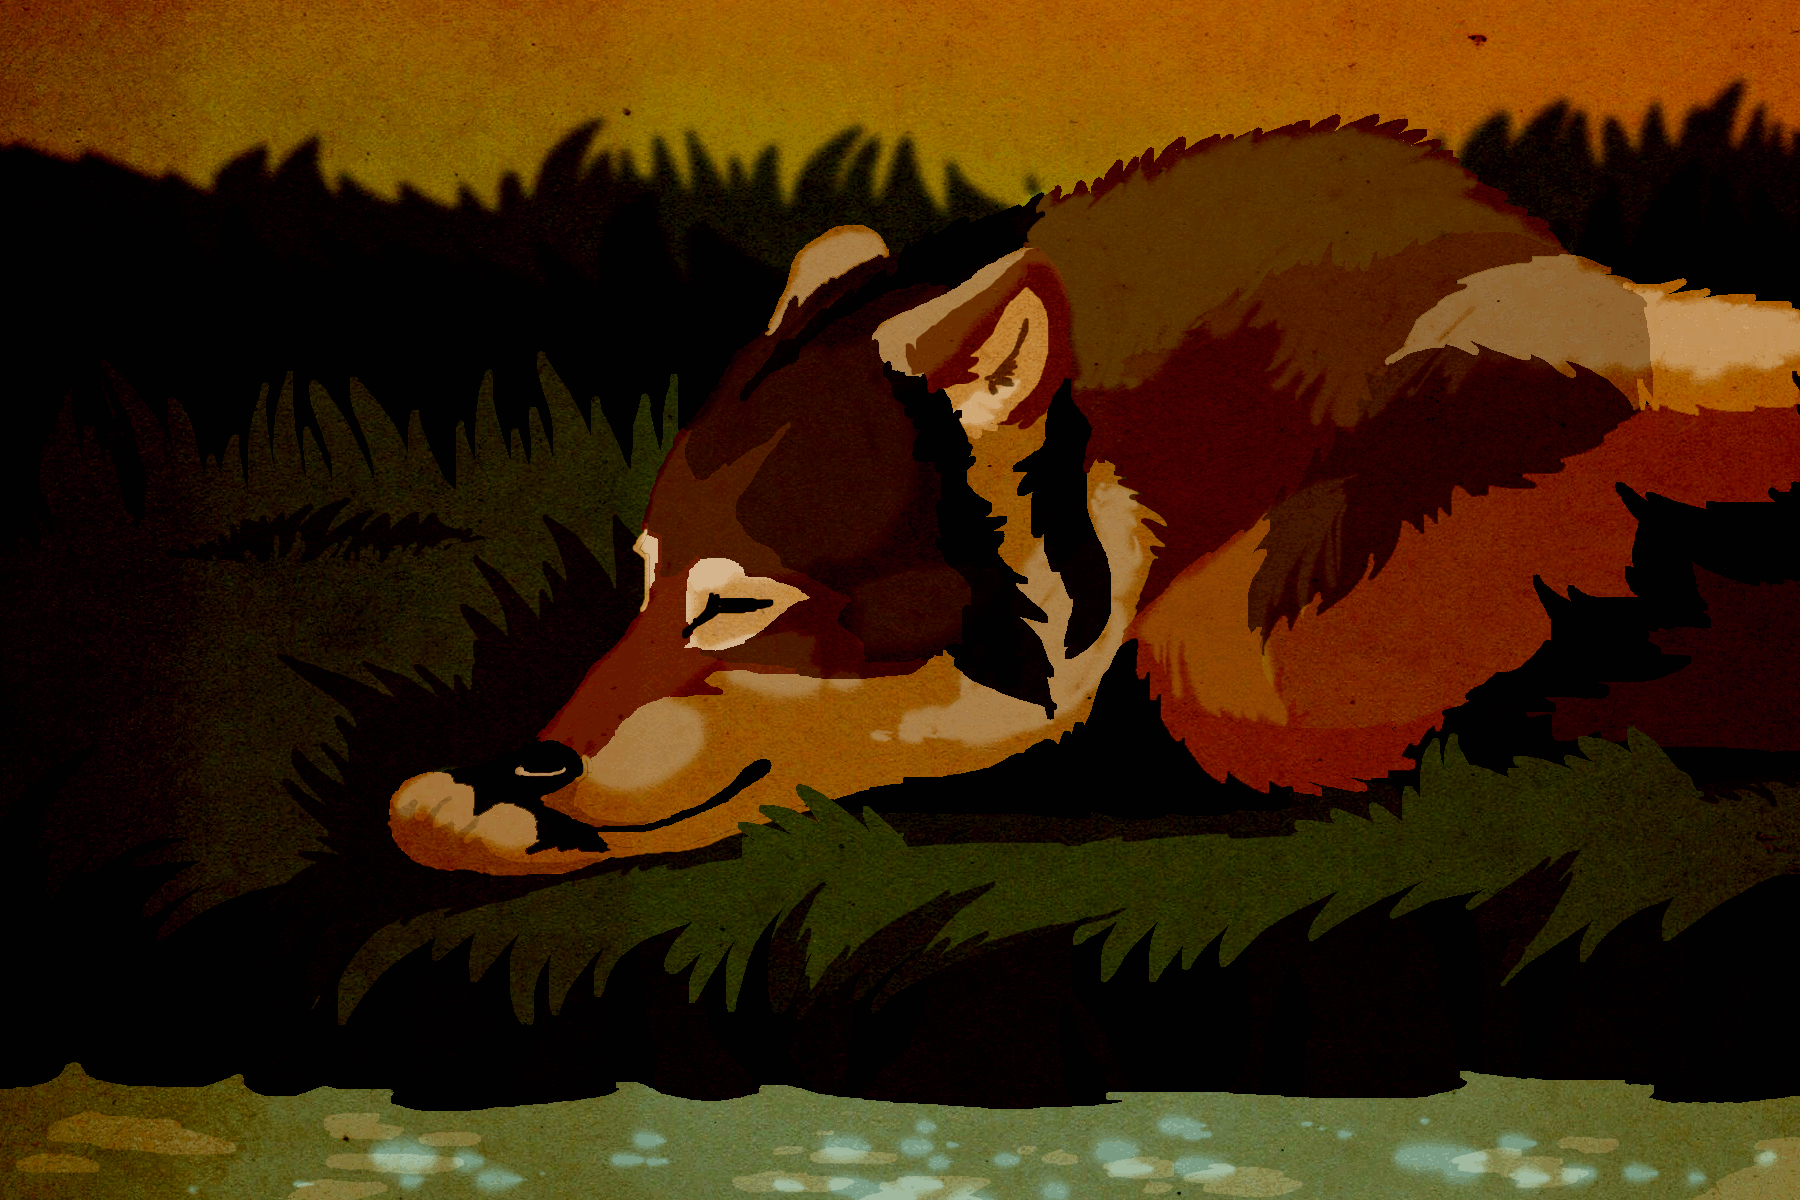 Sleepy wolf